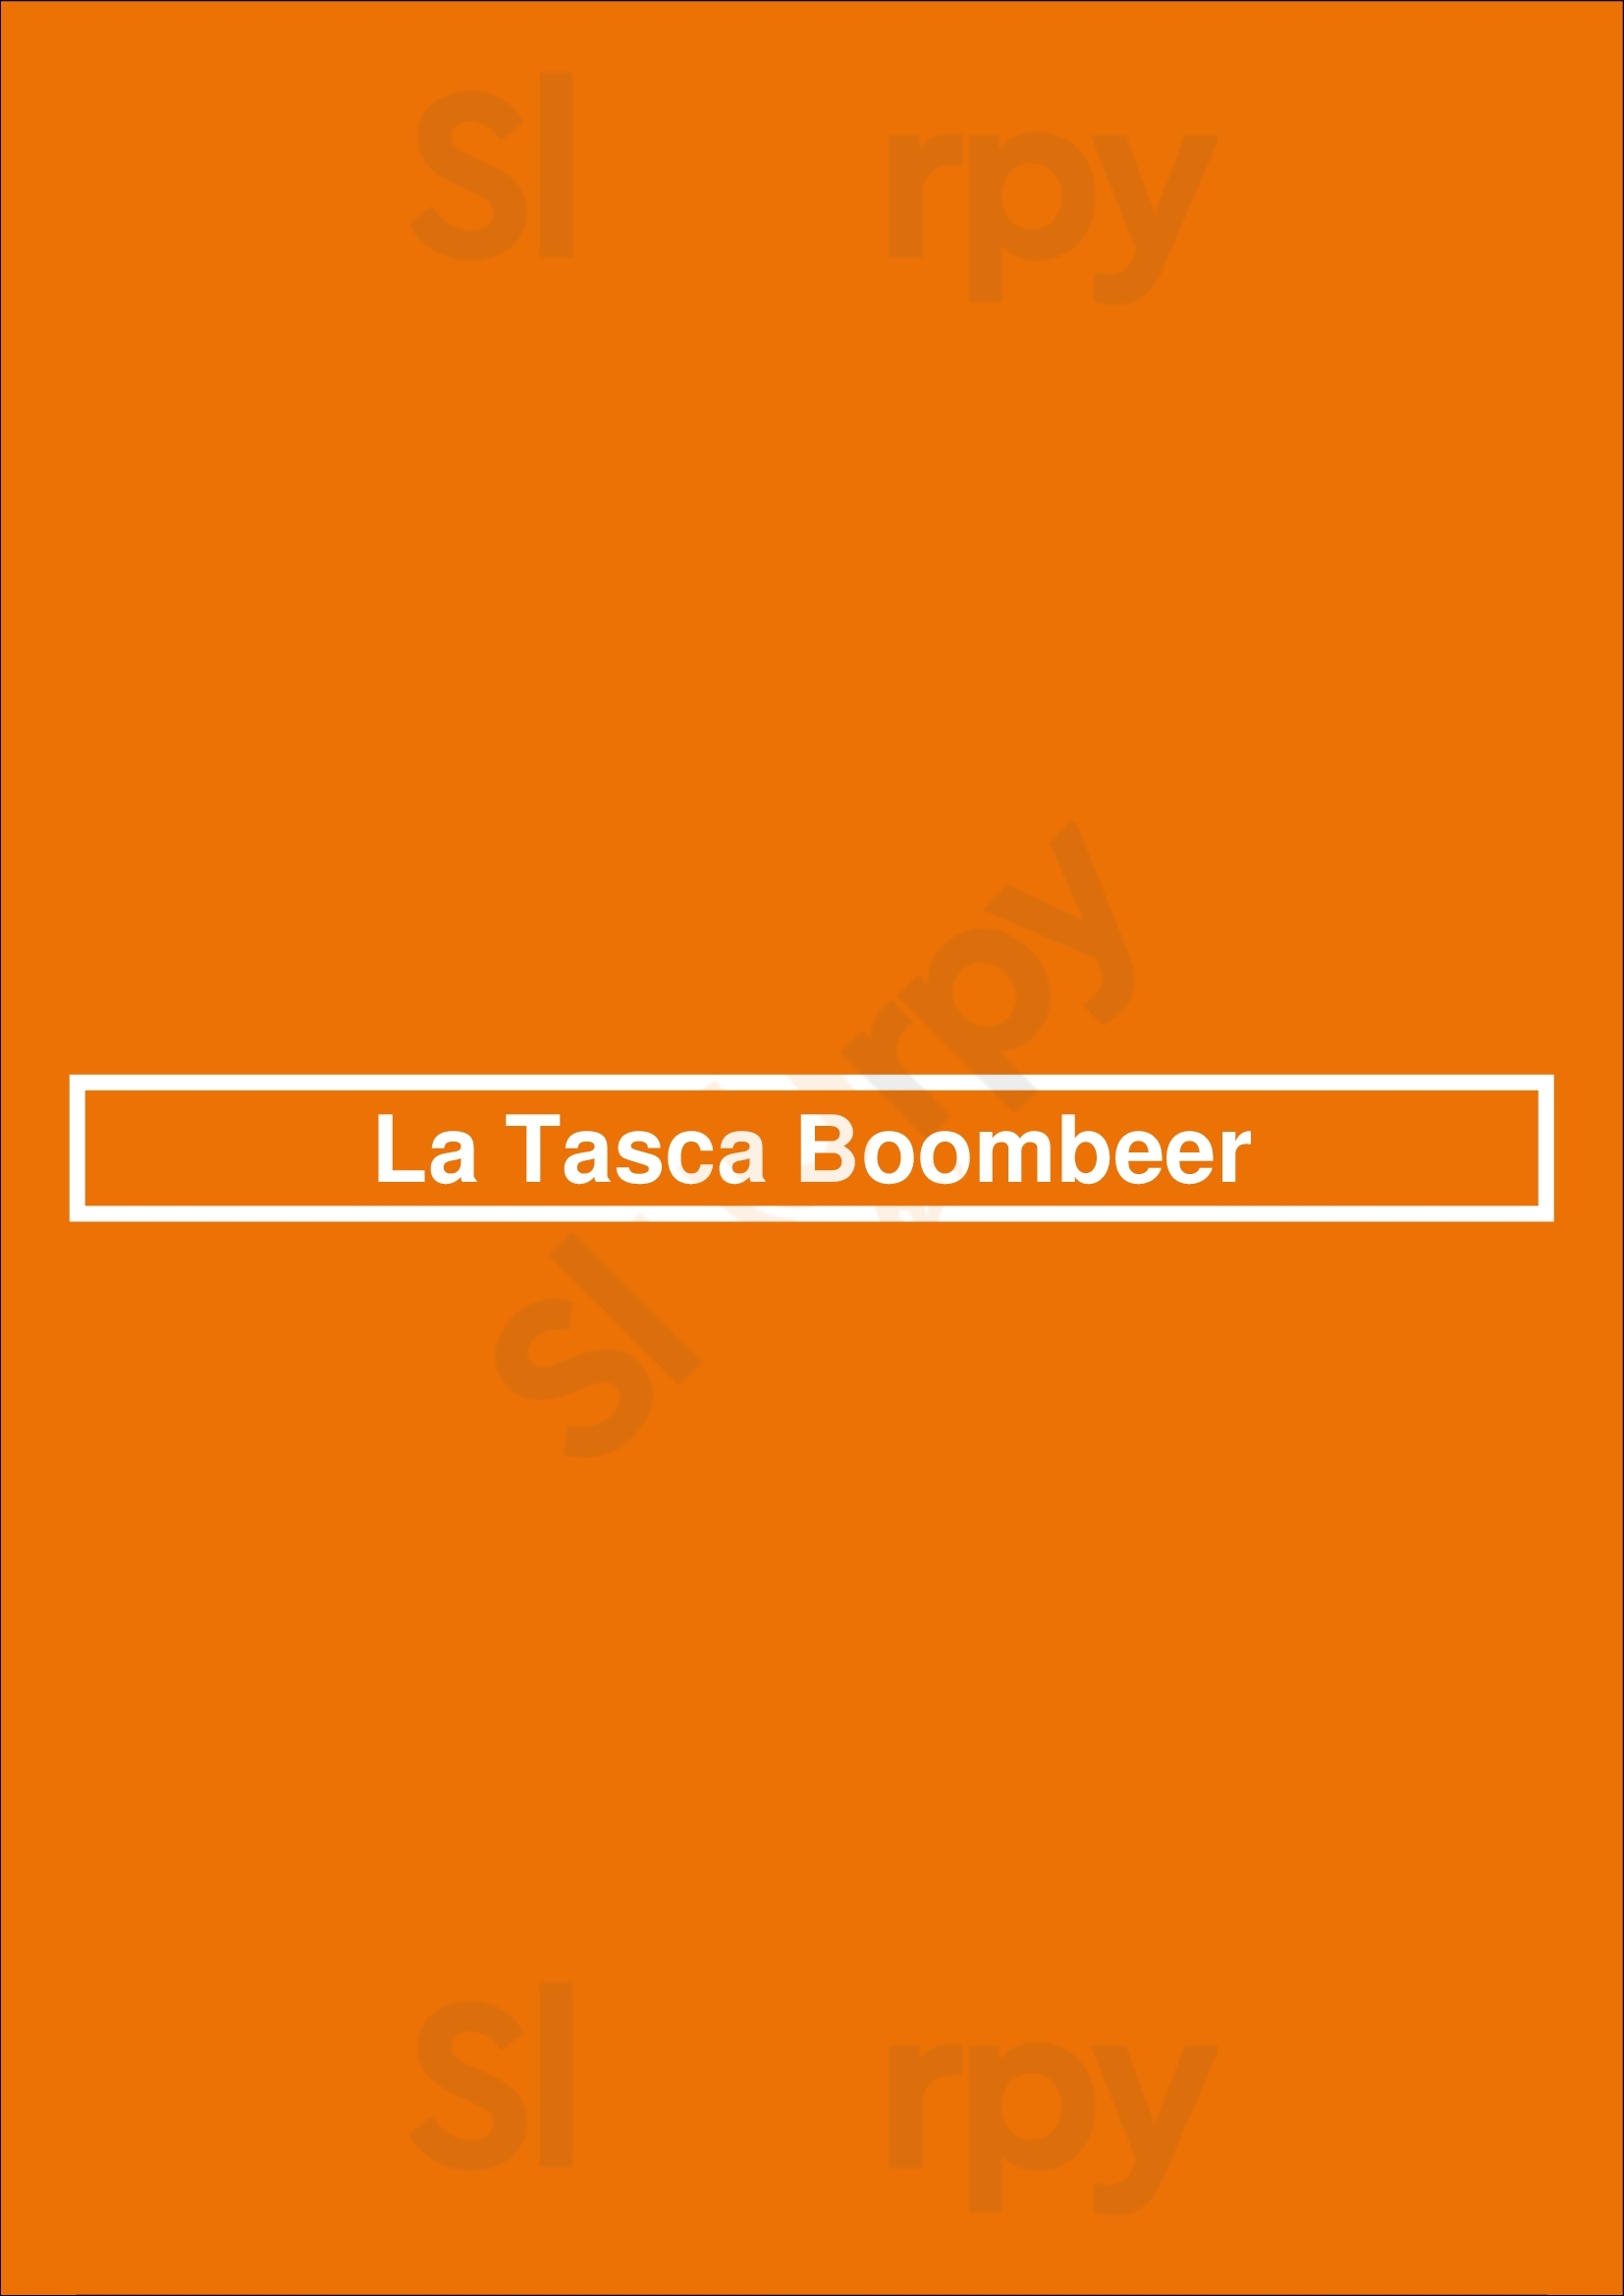 La Tasca Boombeer Málaga Menu - 1